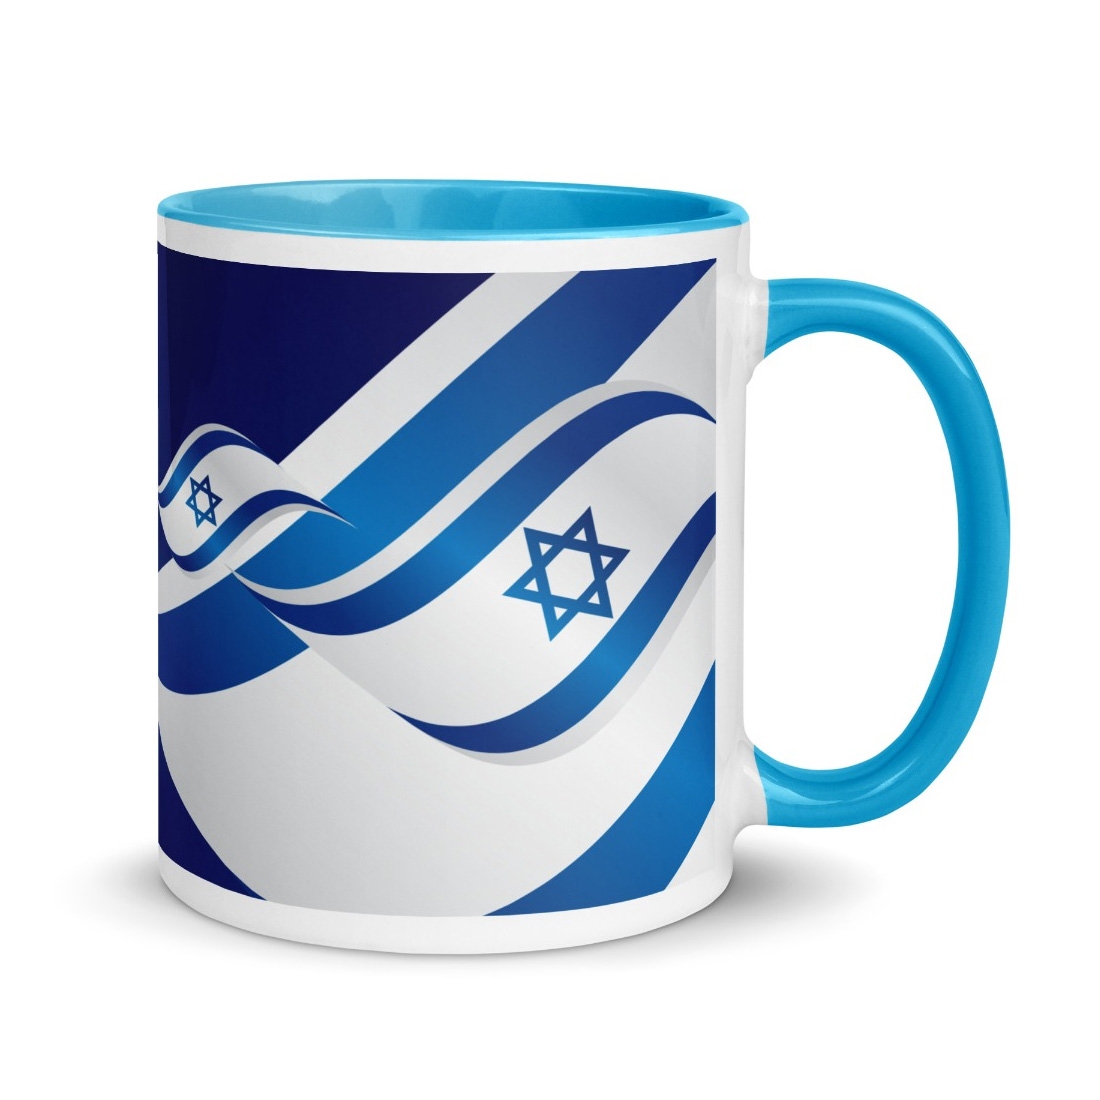 Israeli Flag Mug with Color Inside - 1